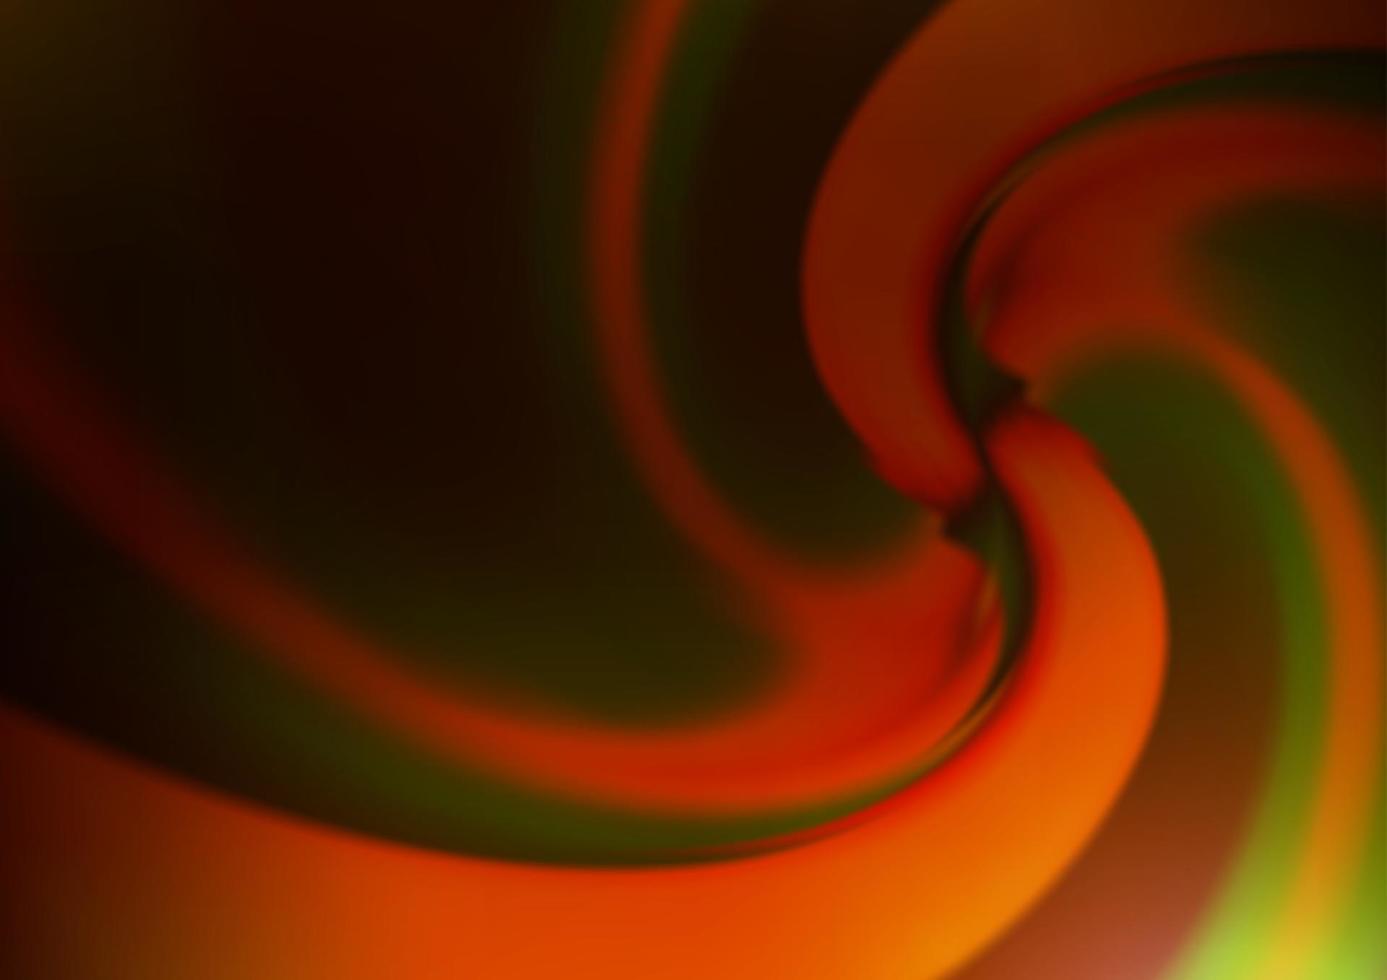 ljusgul, orange vektormall med flytande former. vektor